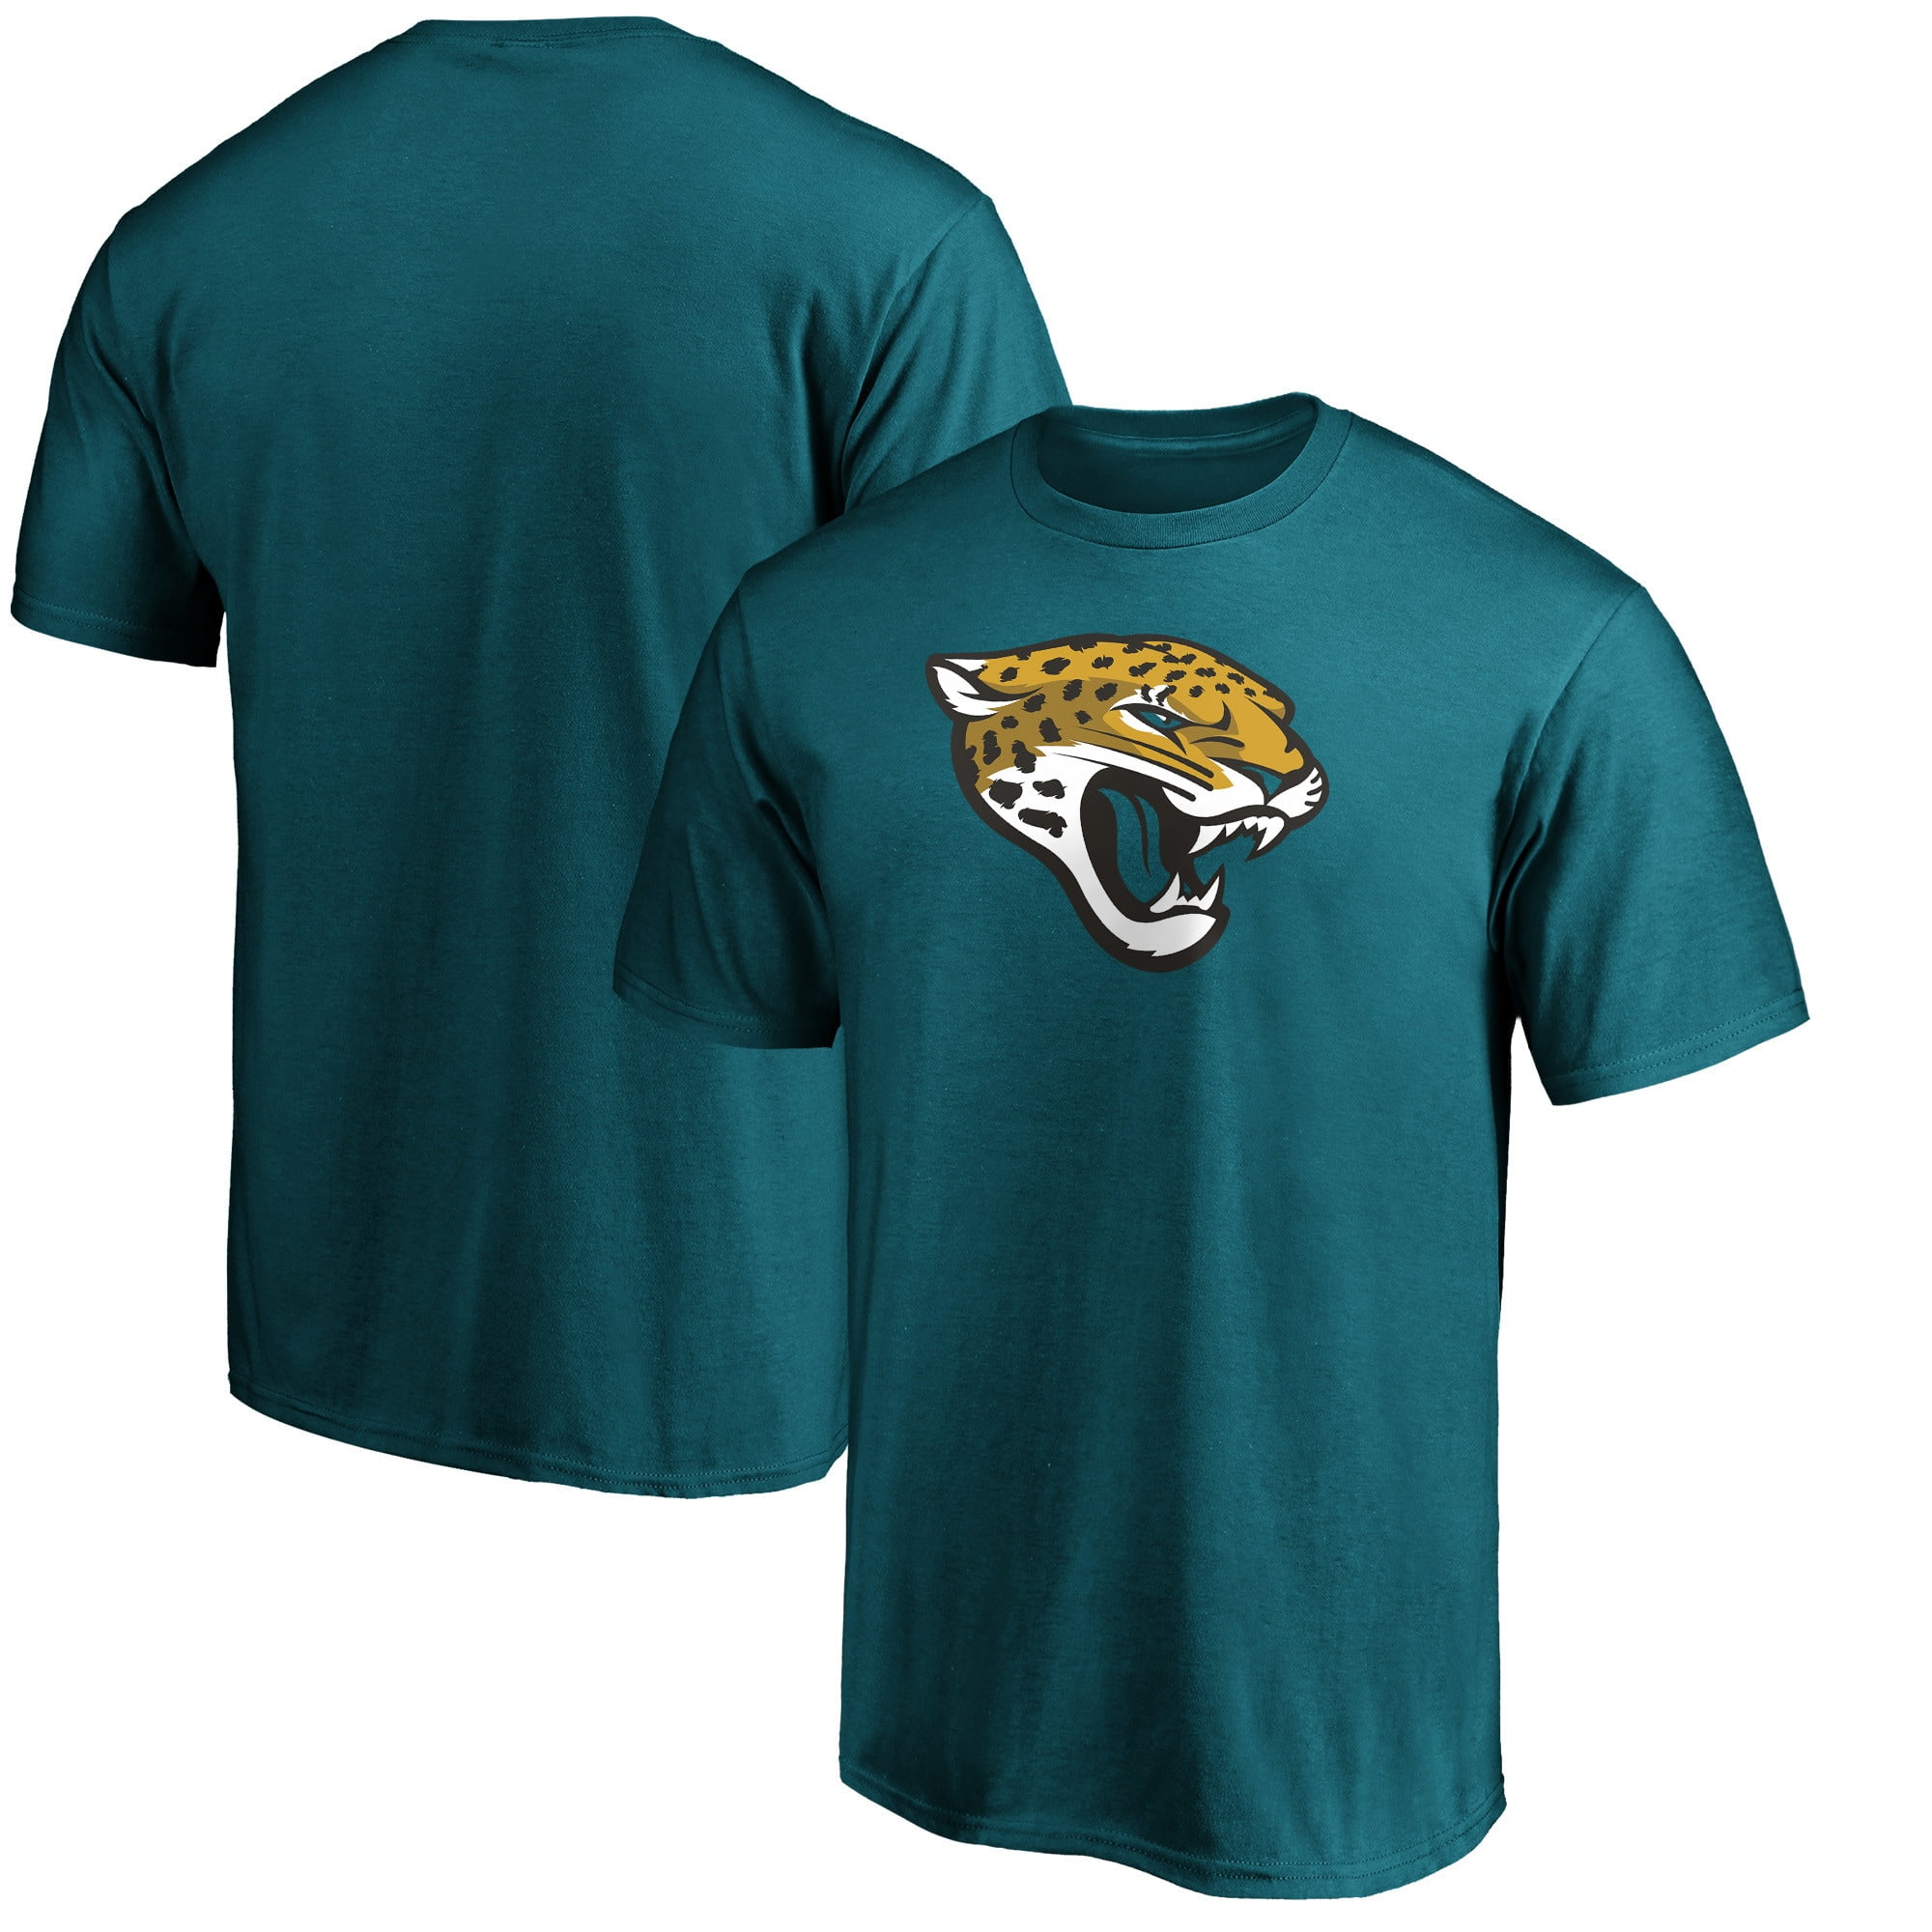 Jacksonville Jaguars man T shirt